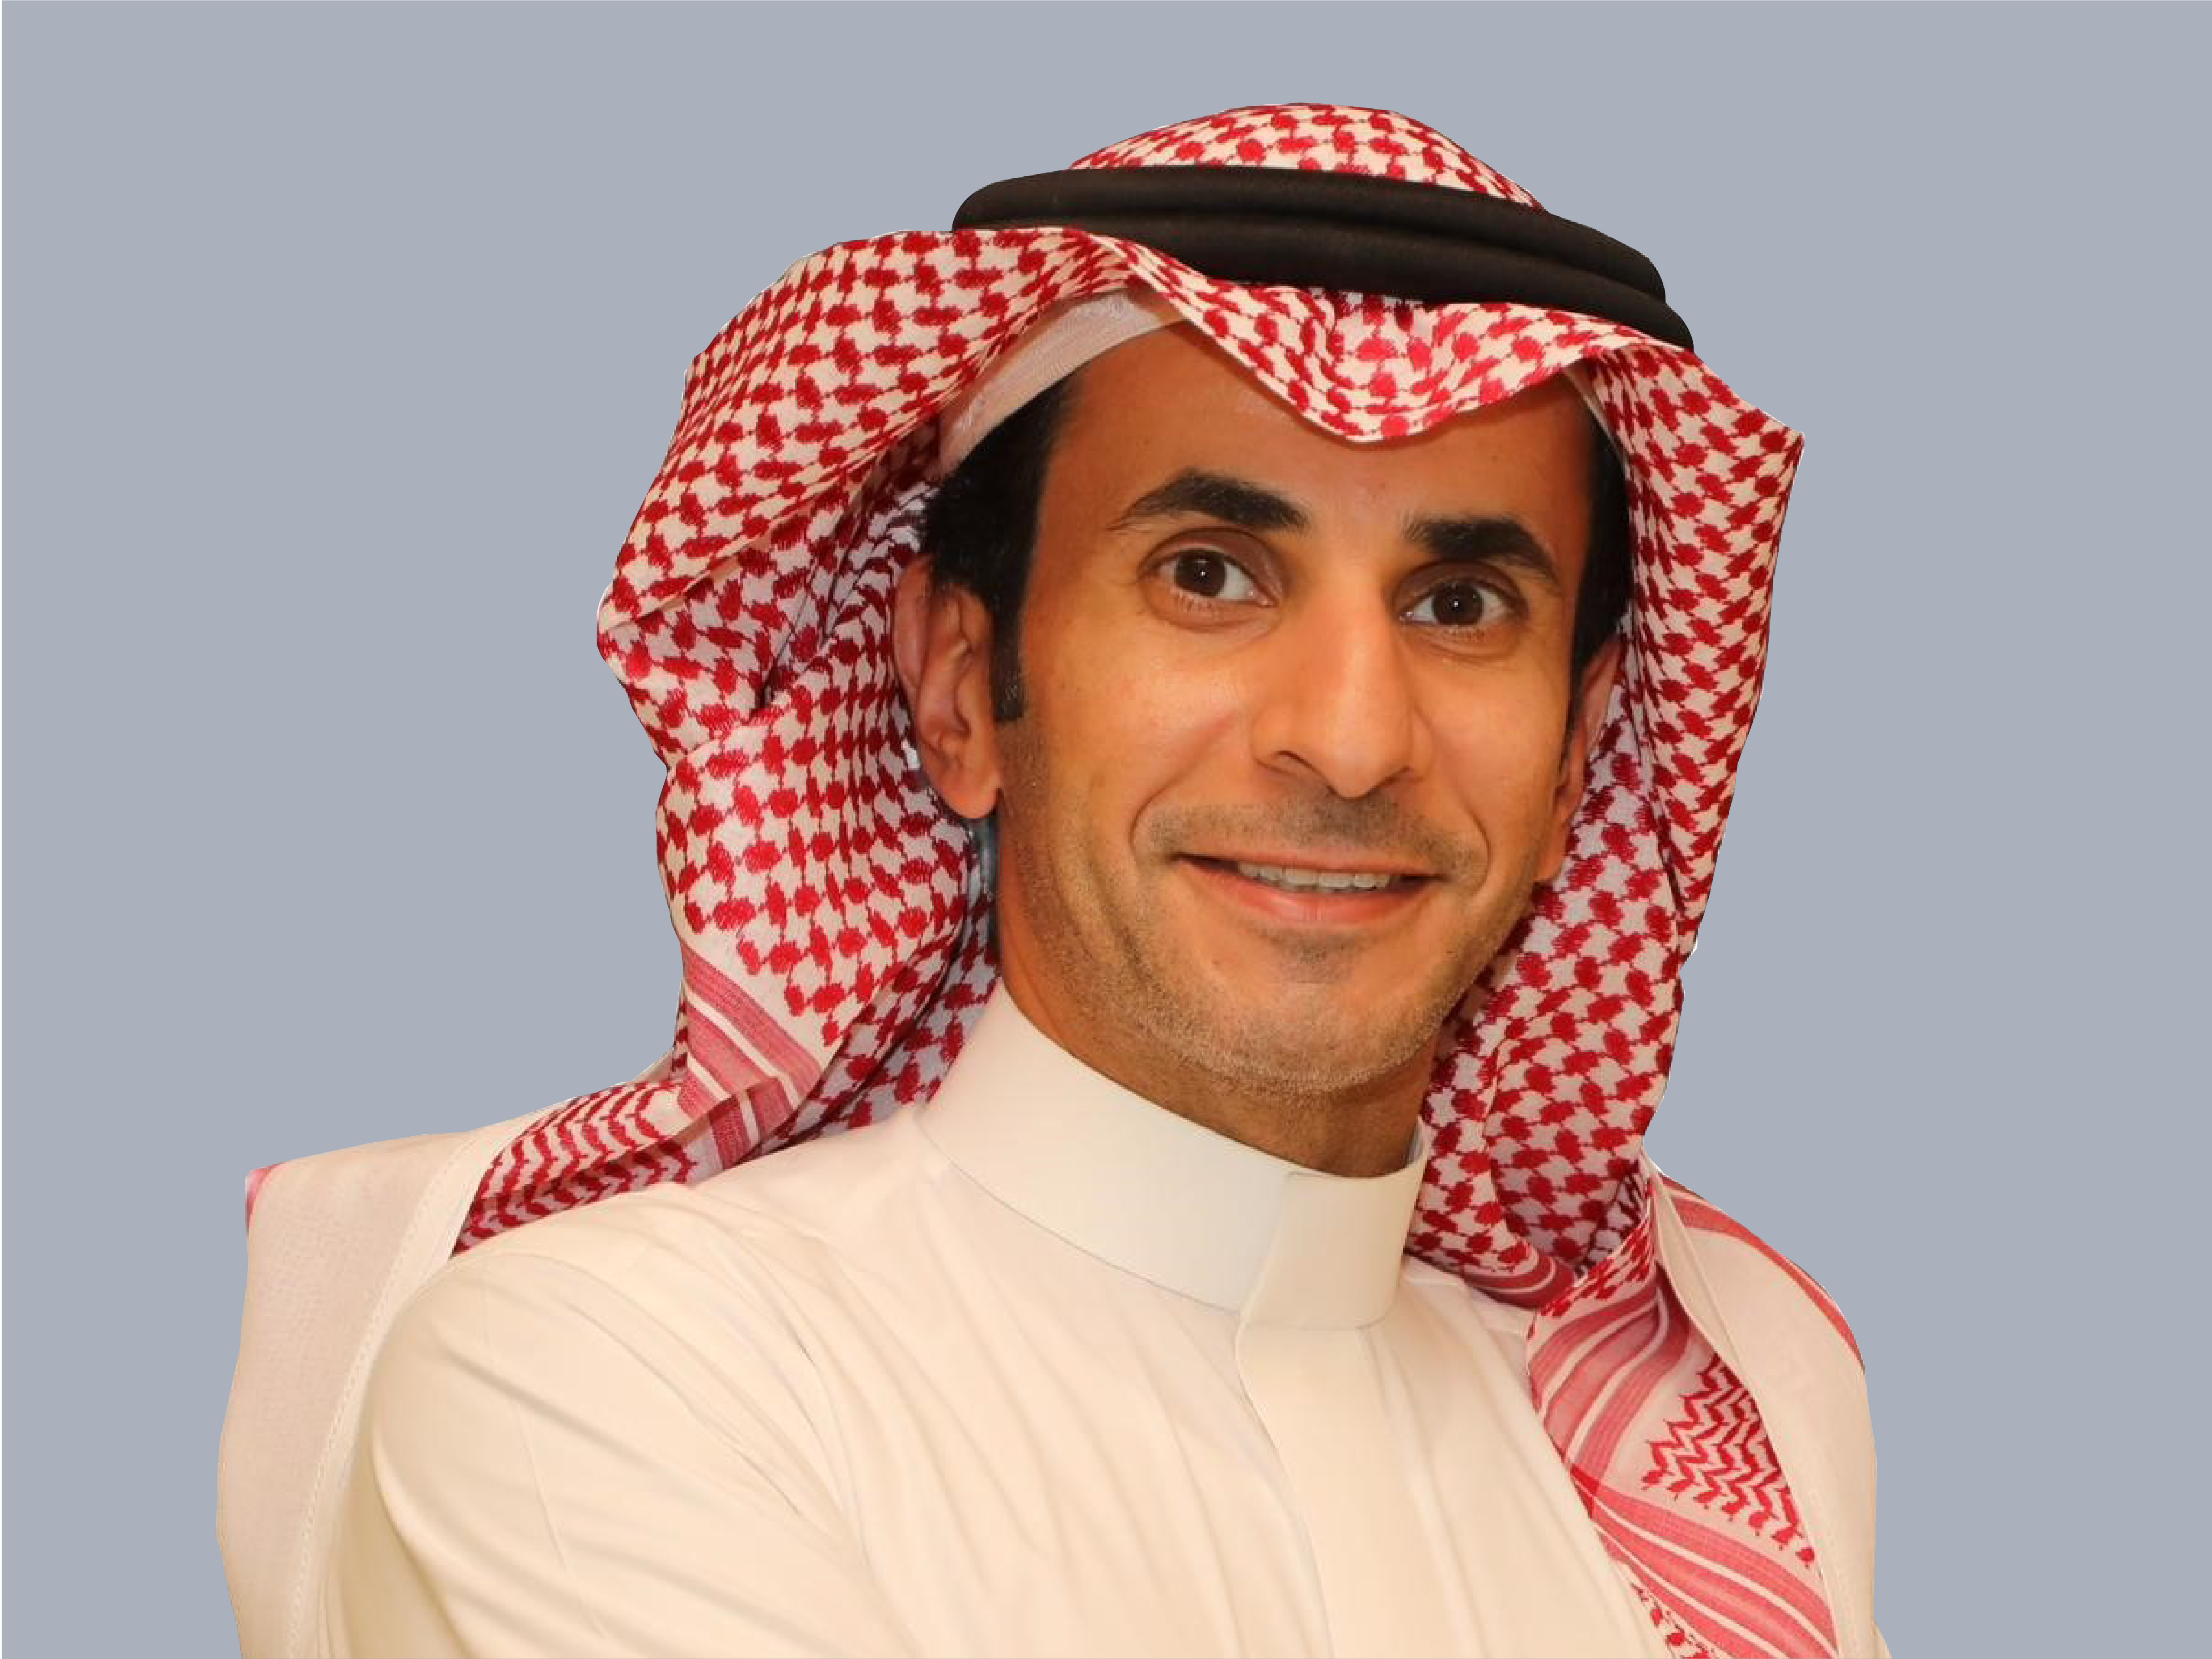 Abdulrahman Abdullah Al-Muqbel